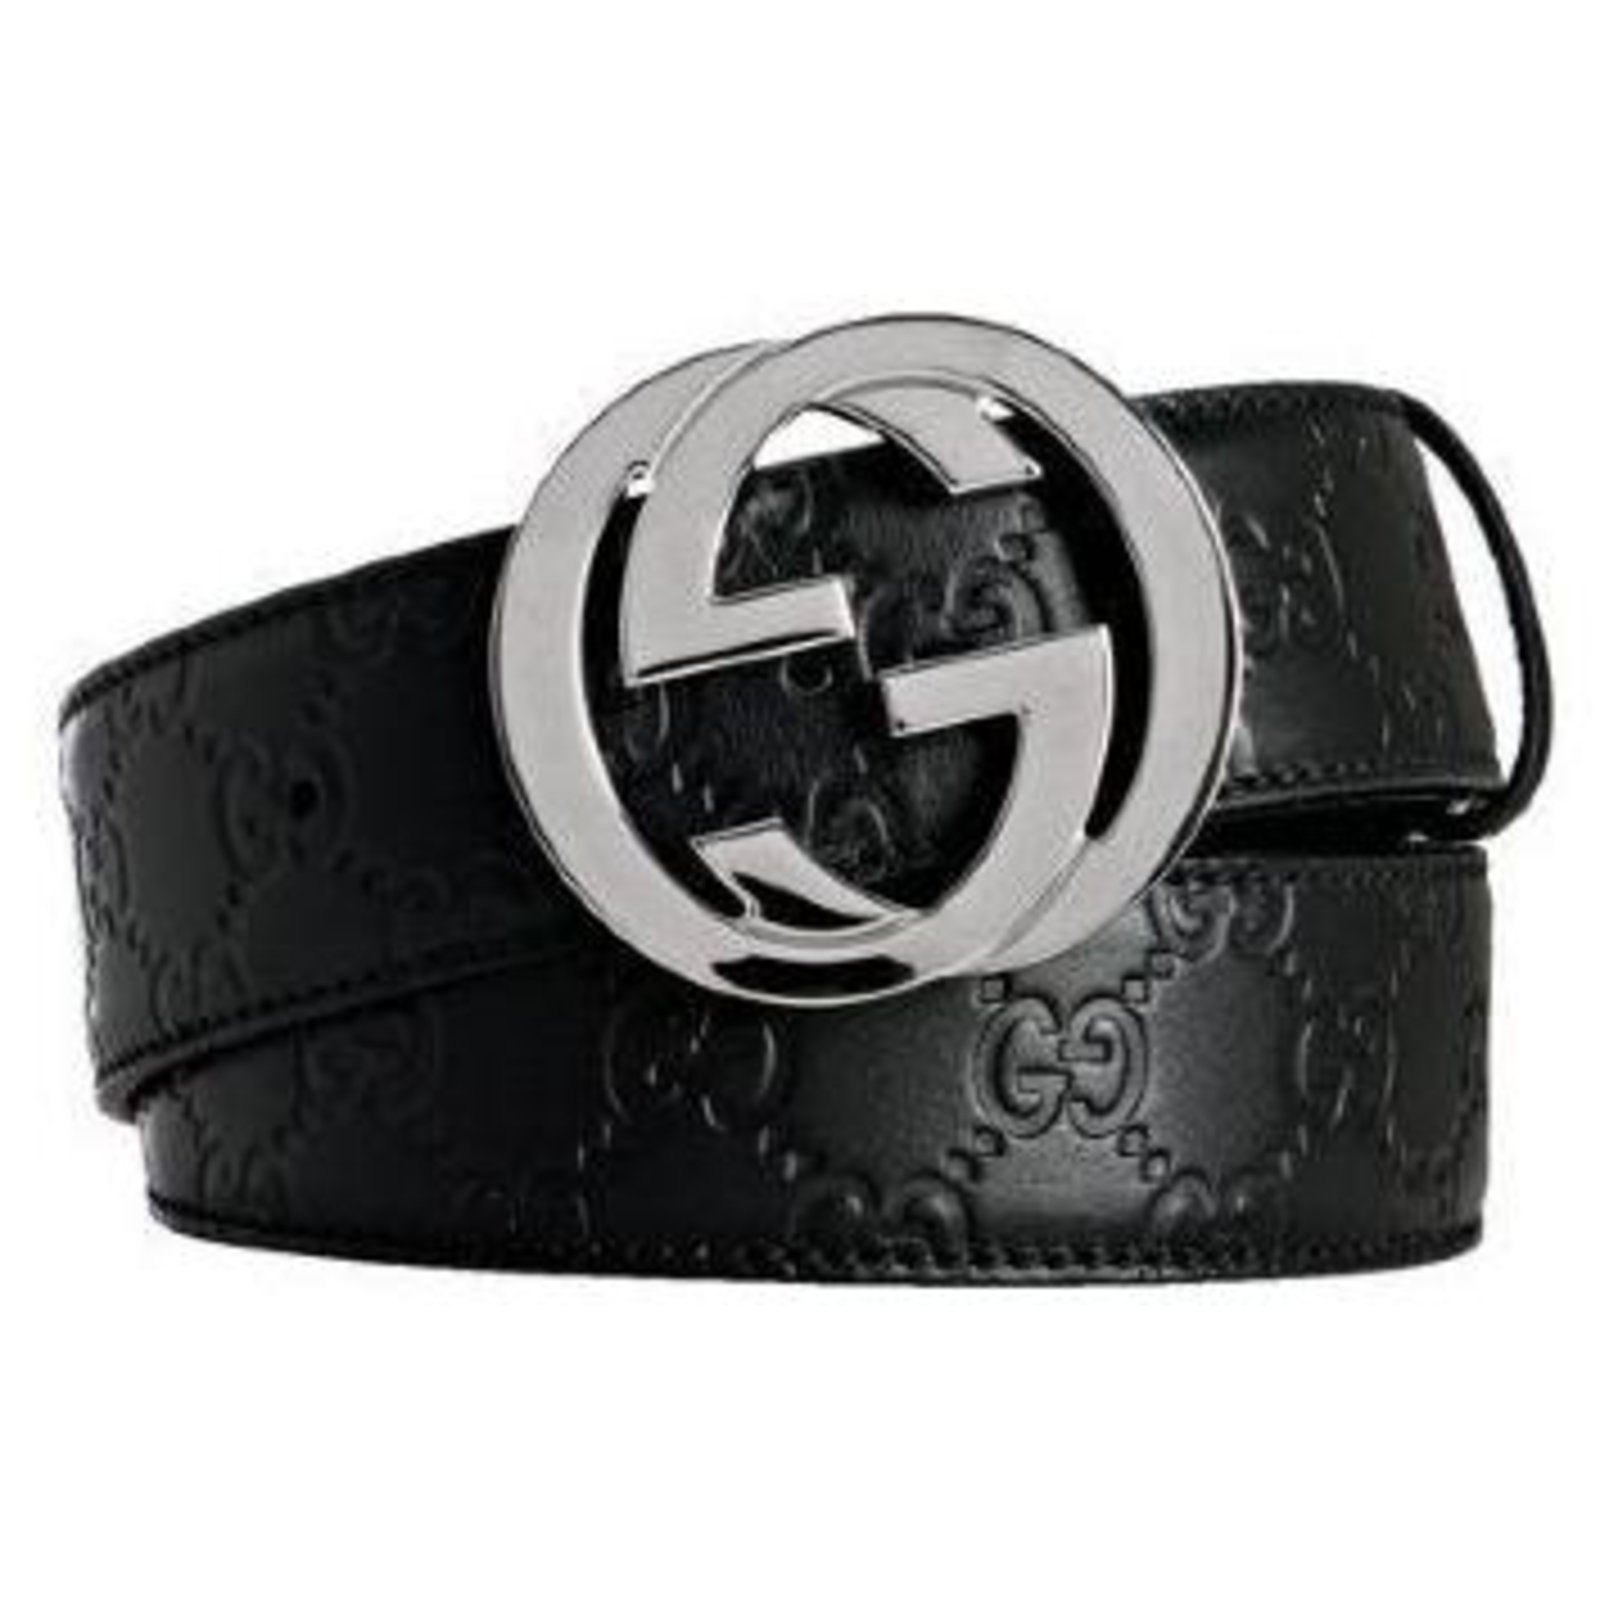 gucci belt leather black